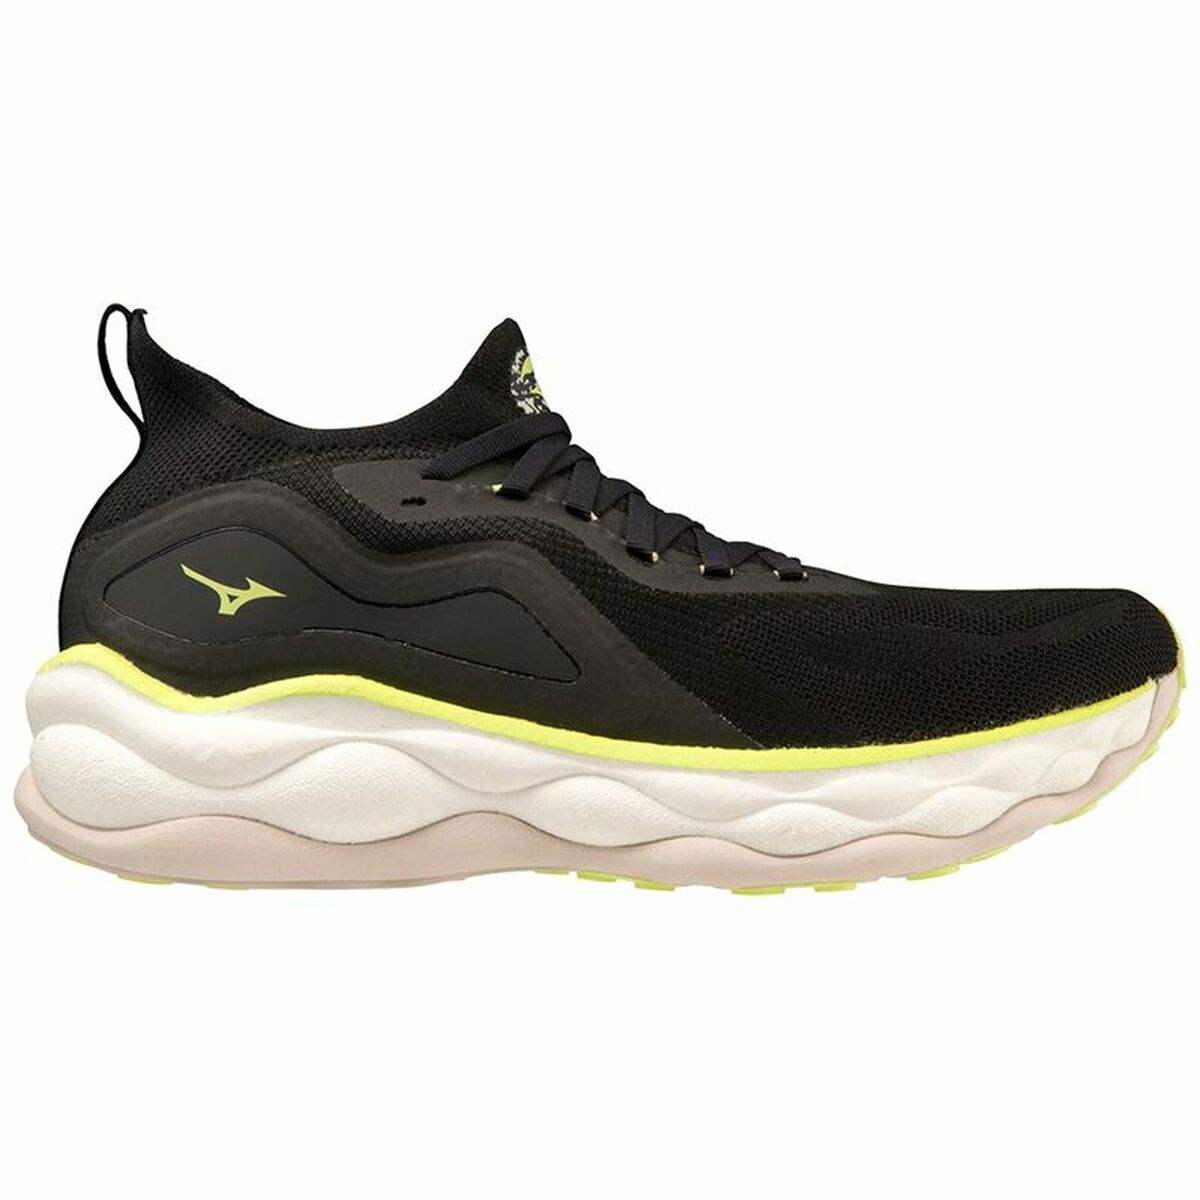 Chaussures de Running pour Adultes Mizuno Wave Neo Ultra Noir Homme - Mizuno - Jardin D'Eyden - jardindeyden.fr